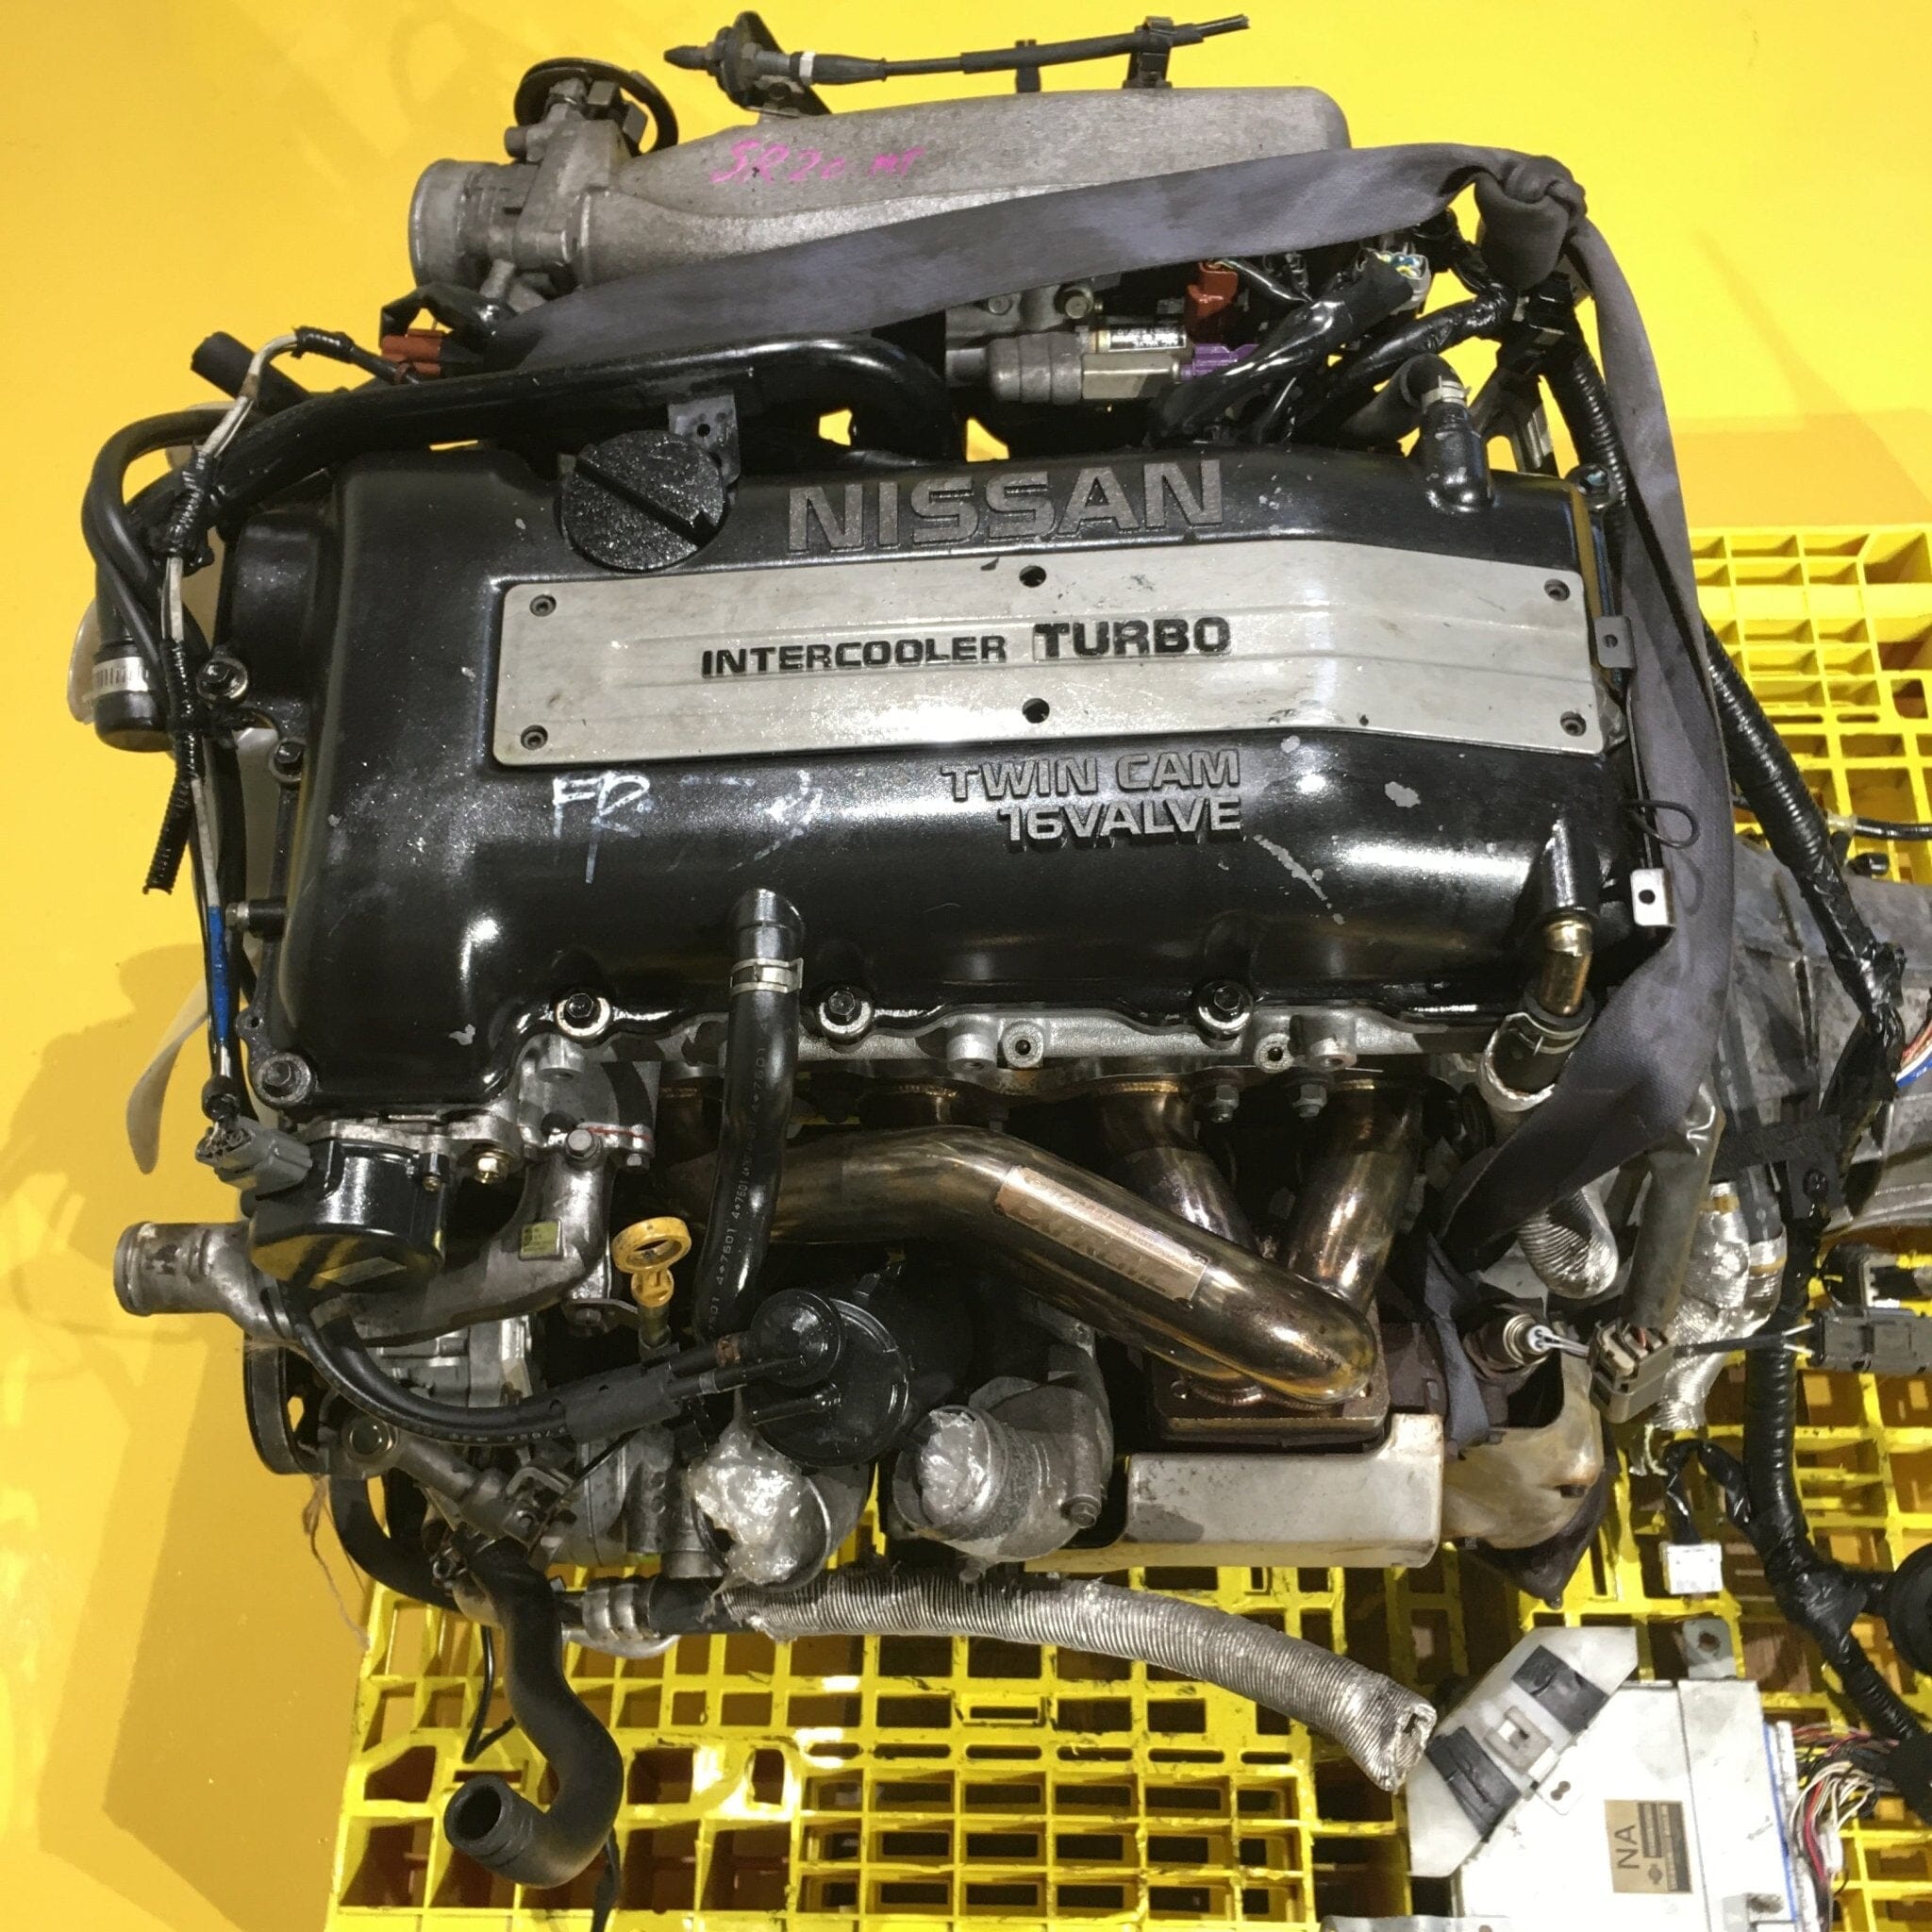 Nissan Silvia S14 1997-1998 Turbo 2.0l 5 Speed Manual JDM Engine Transmission Full Swap - SR20DET